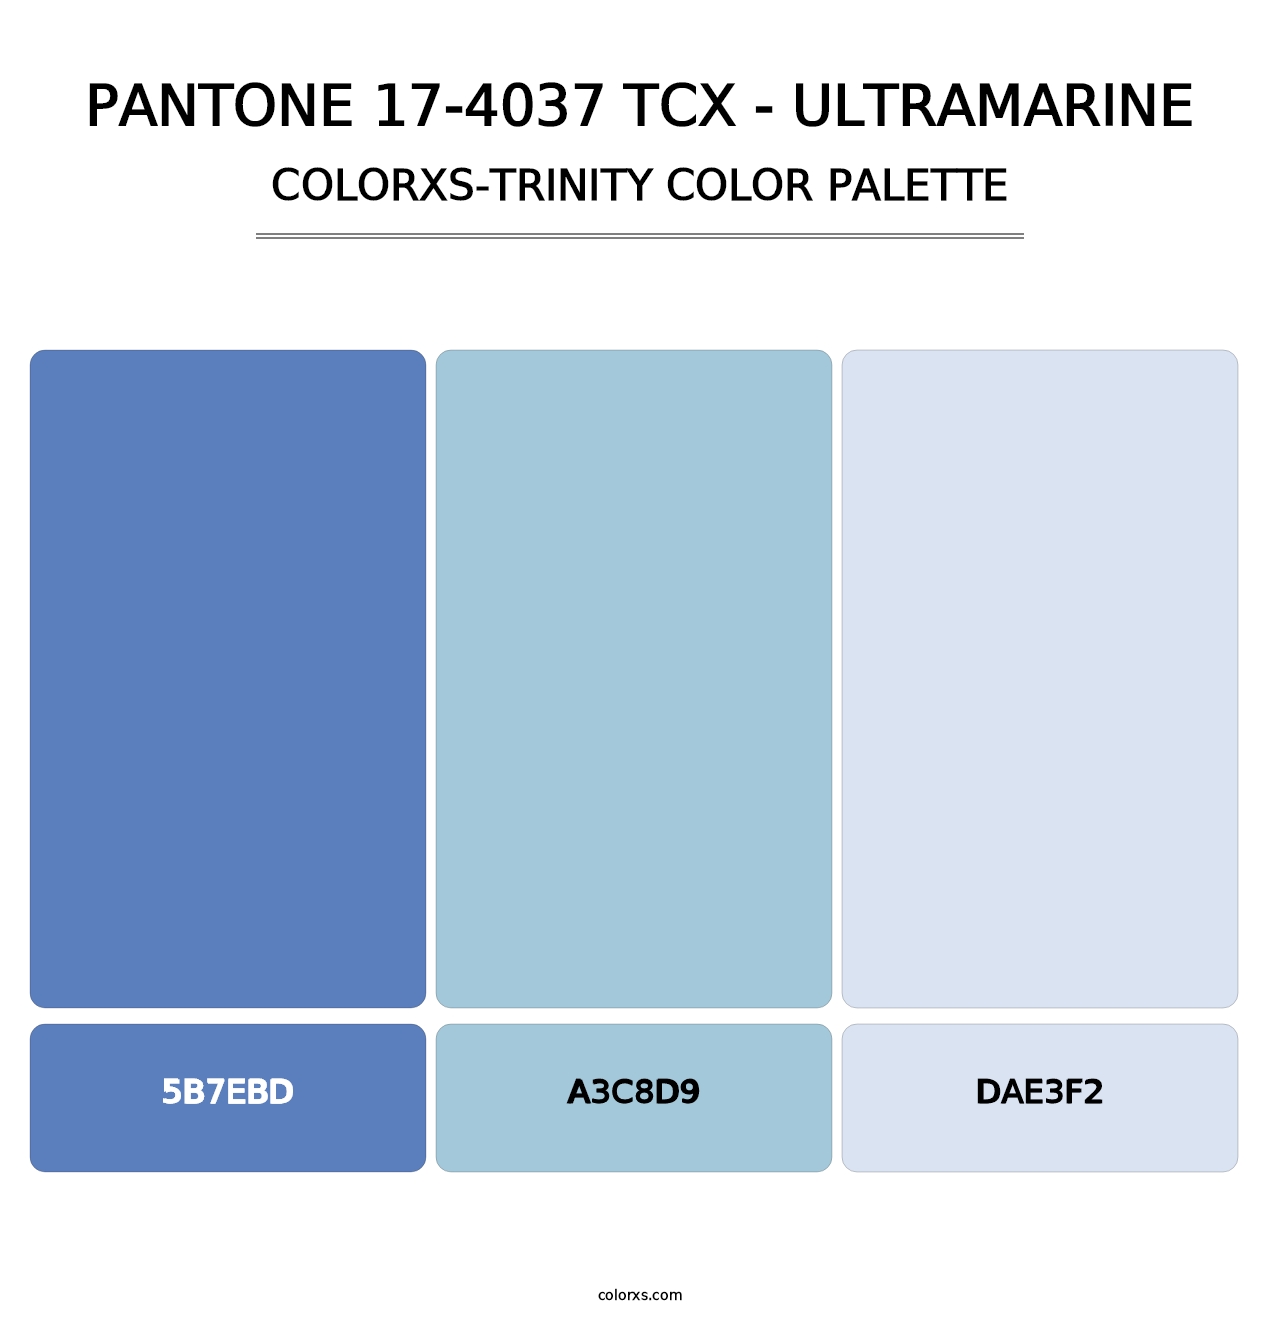 PANTONE 17-4037 TCX - Ultramarine - Colorxs Trinity Palette